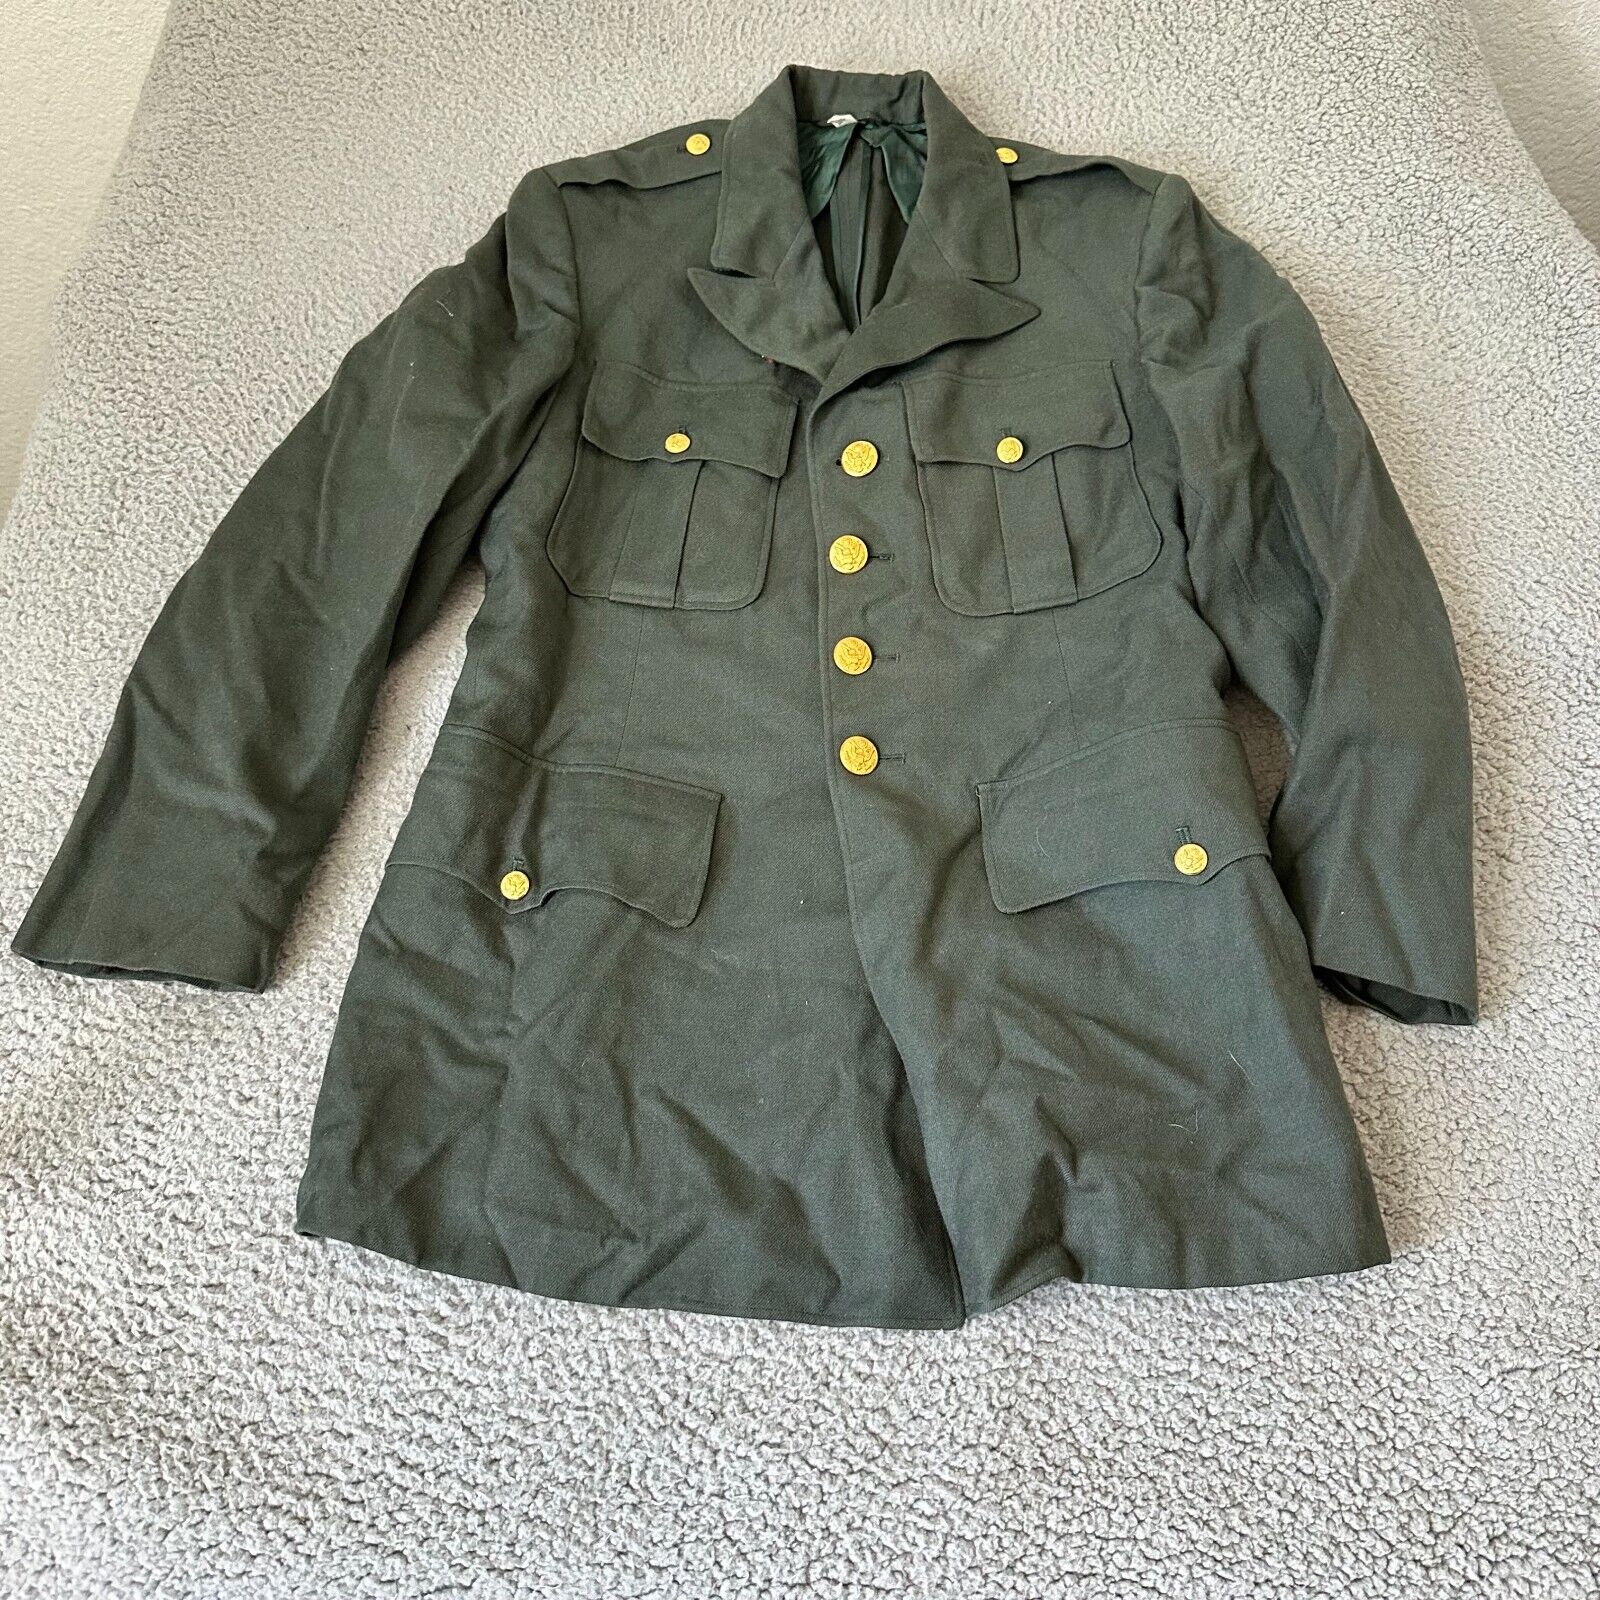 Vintage Military Jacket Mens 39 Green US Army Green 50s Quartermaster 100% Wool